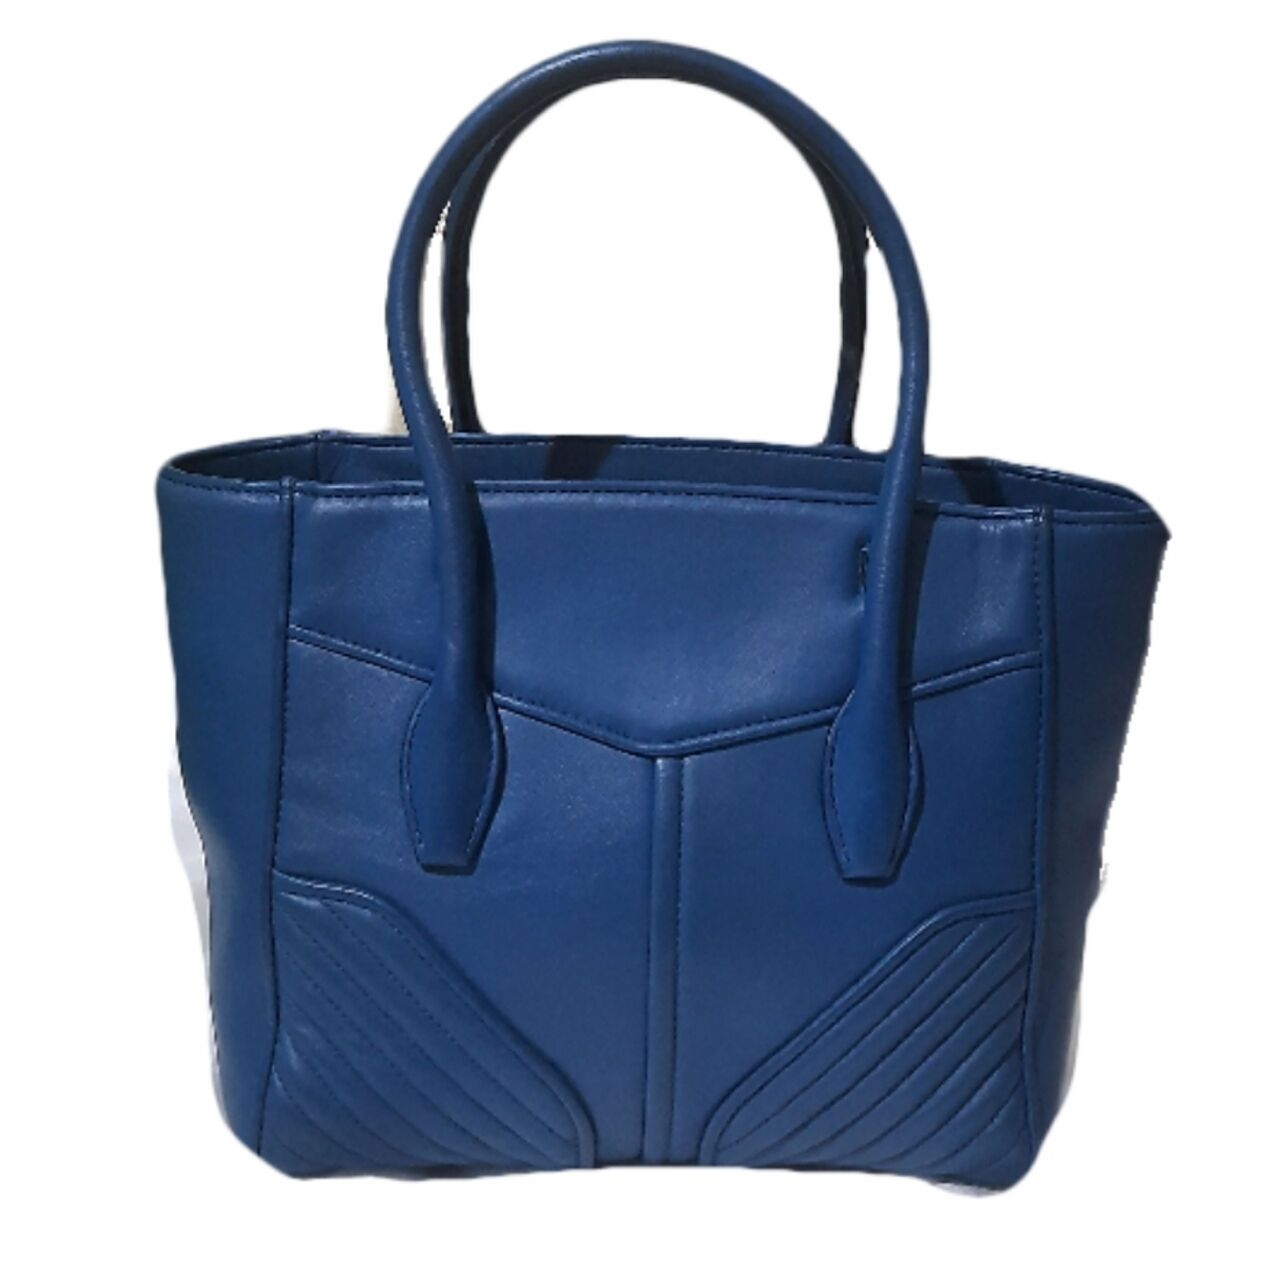 Miu Miu Blue Sling Bag